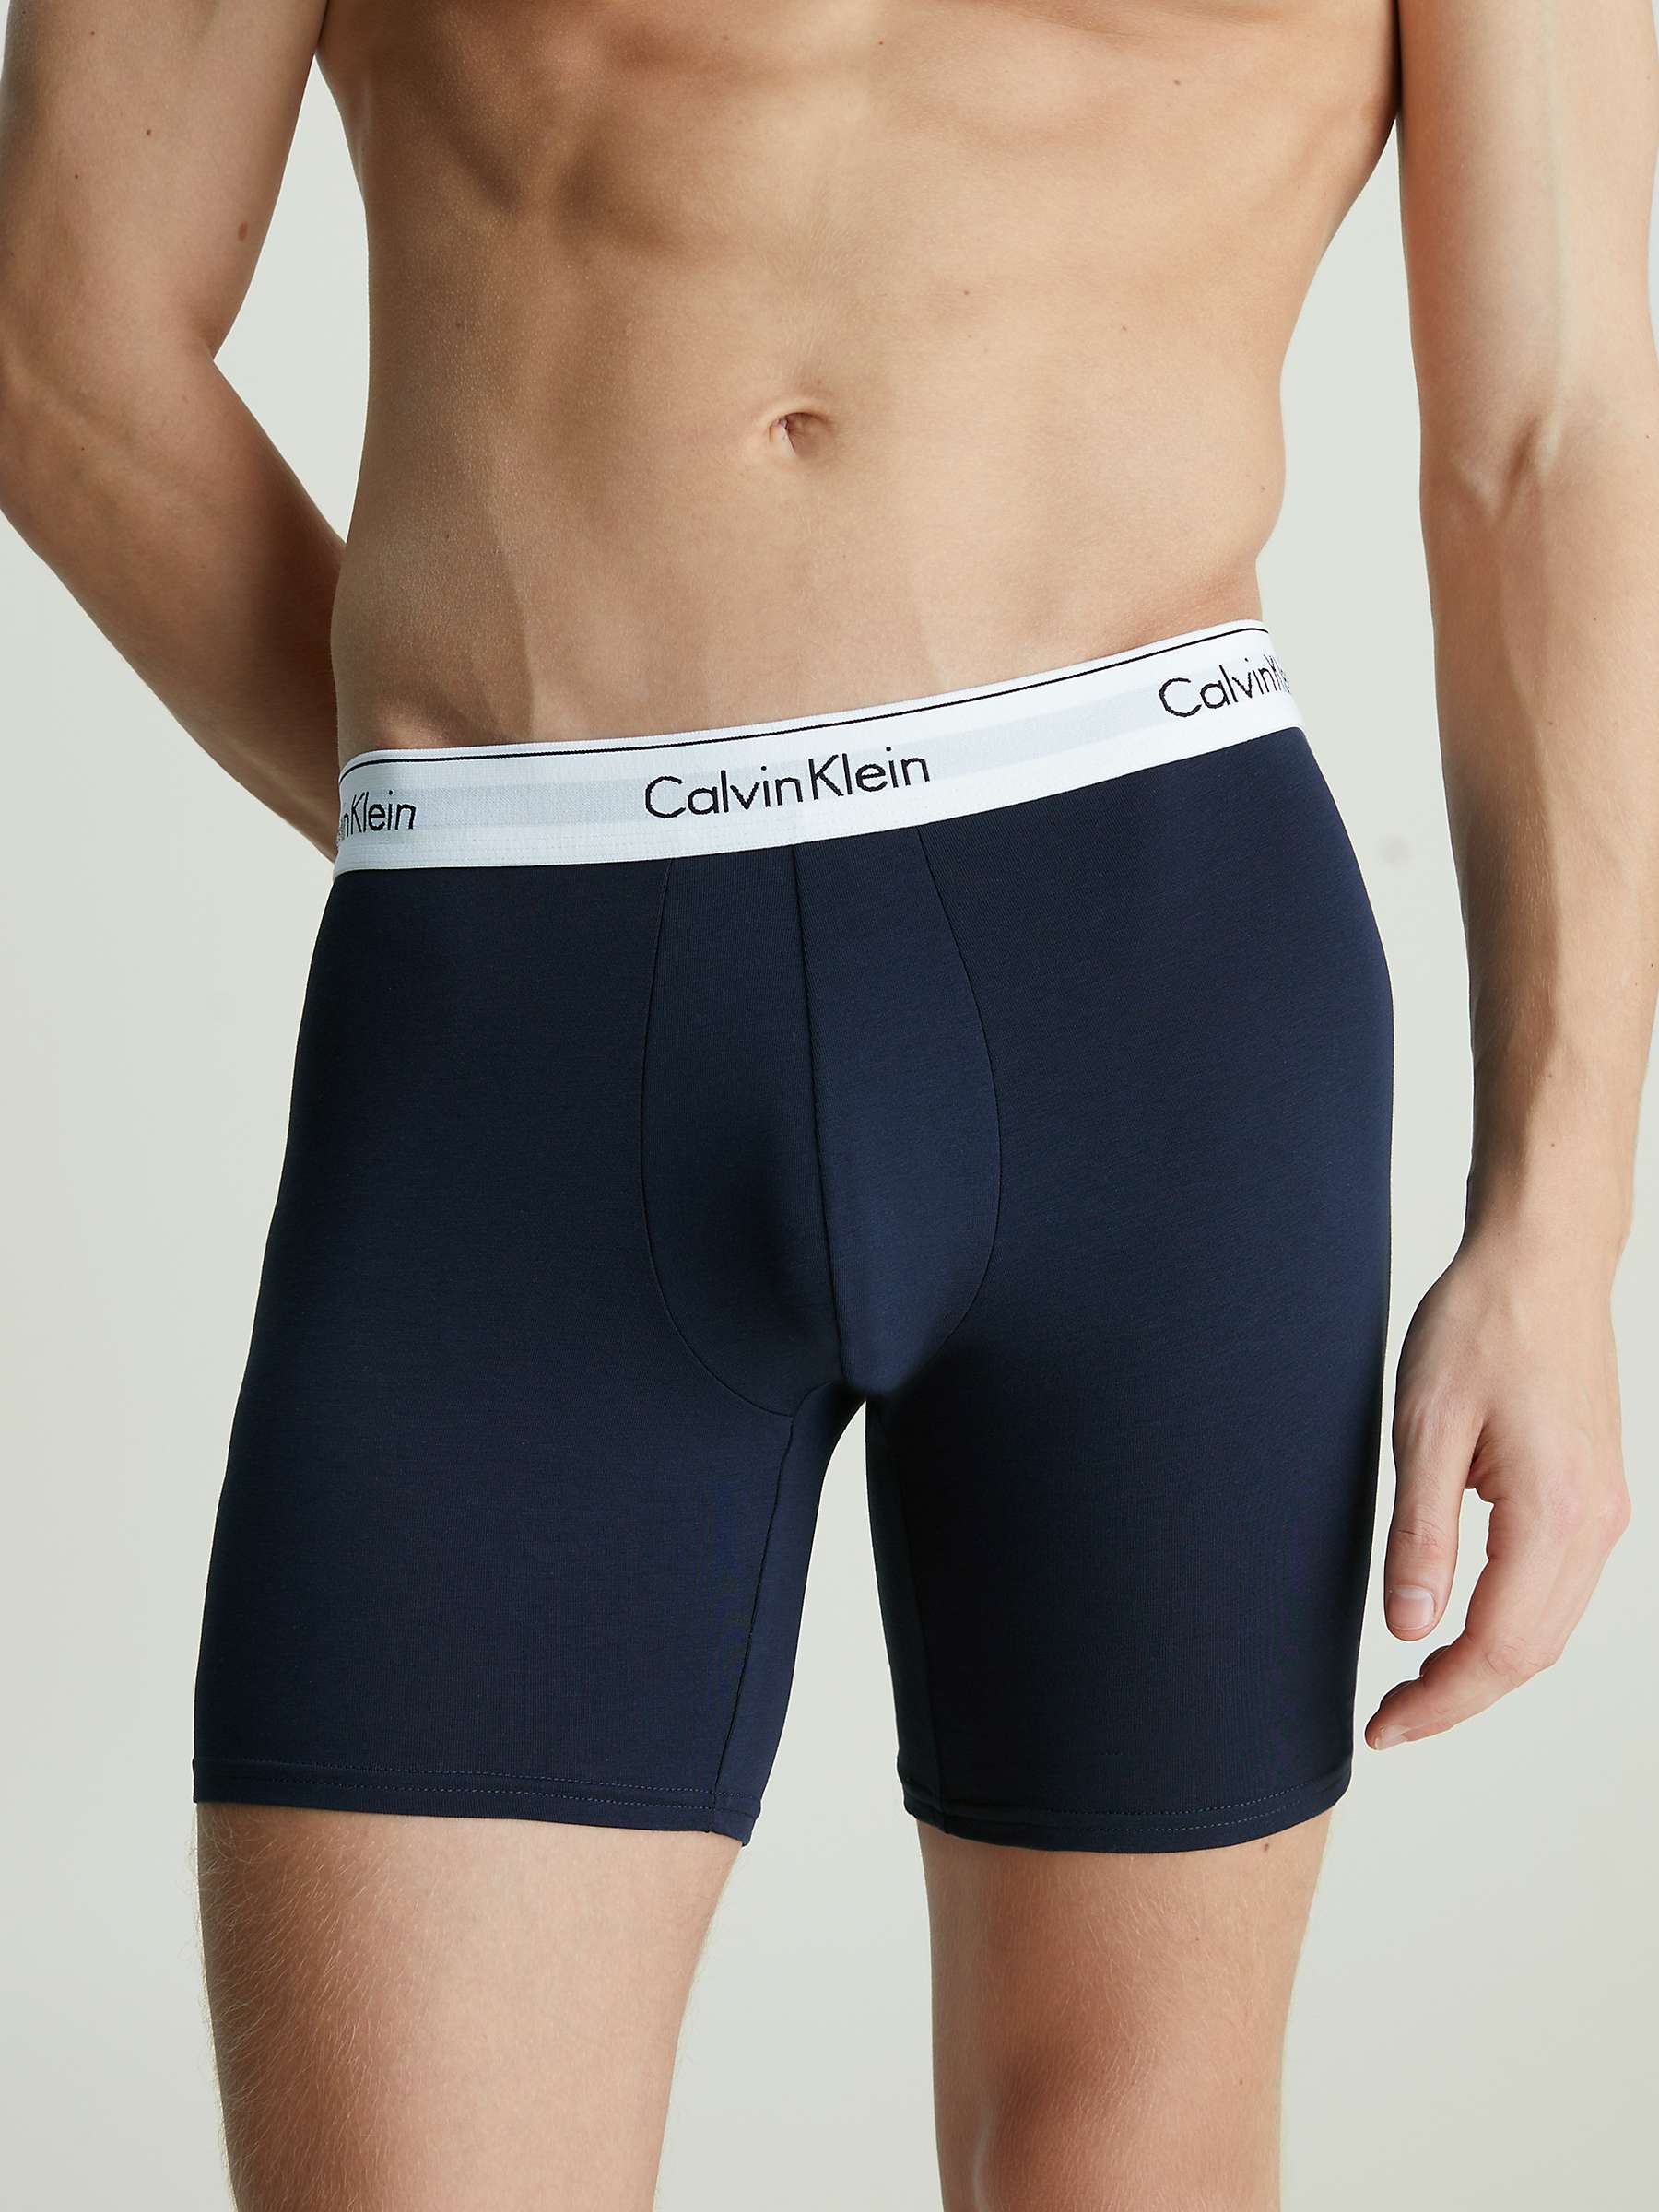 Buy Calvin Klein Cotton Stretch Boxer Brief, Pack of 3 Online at johnlewis.com